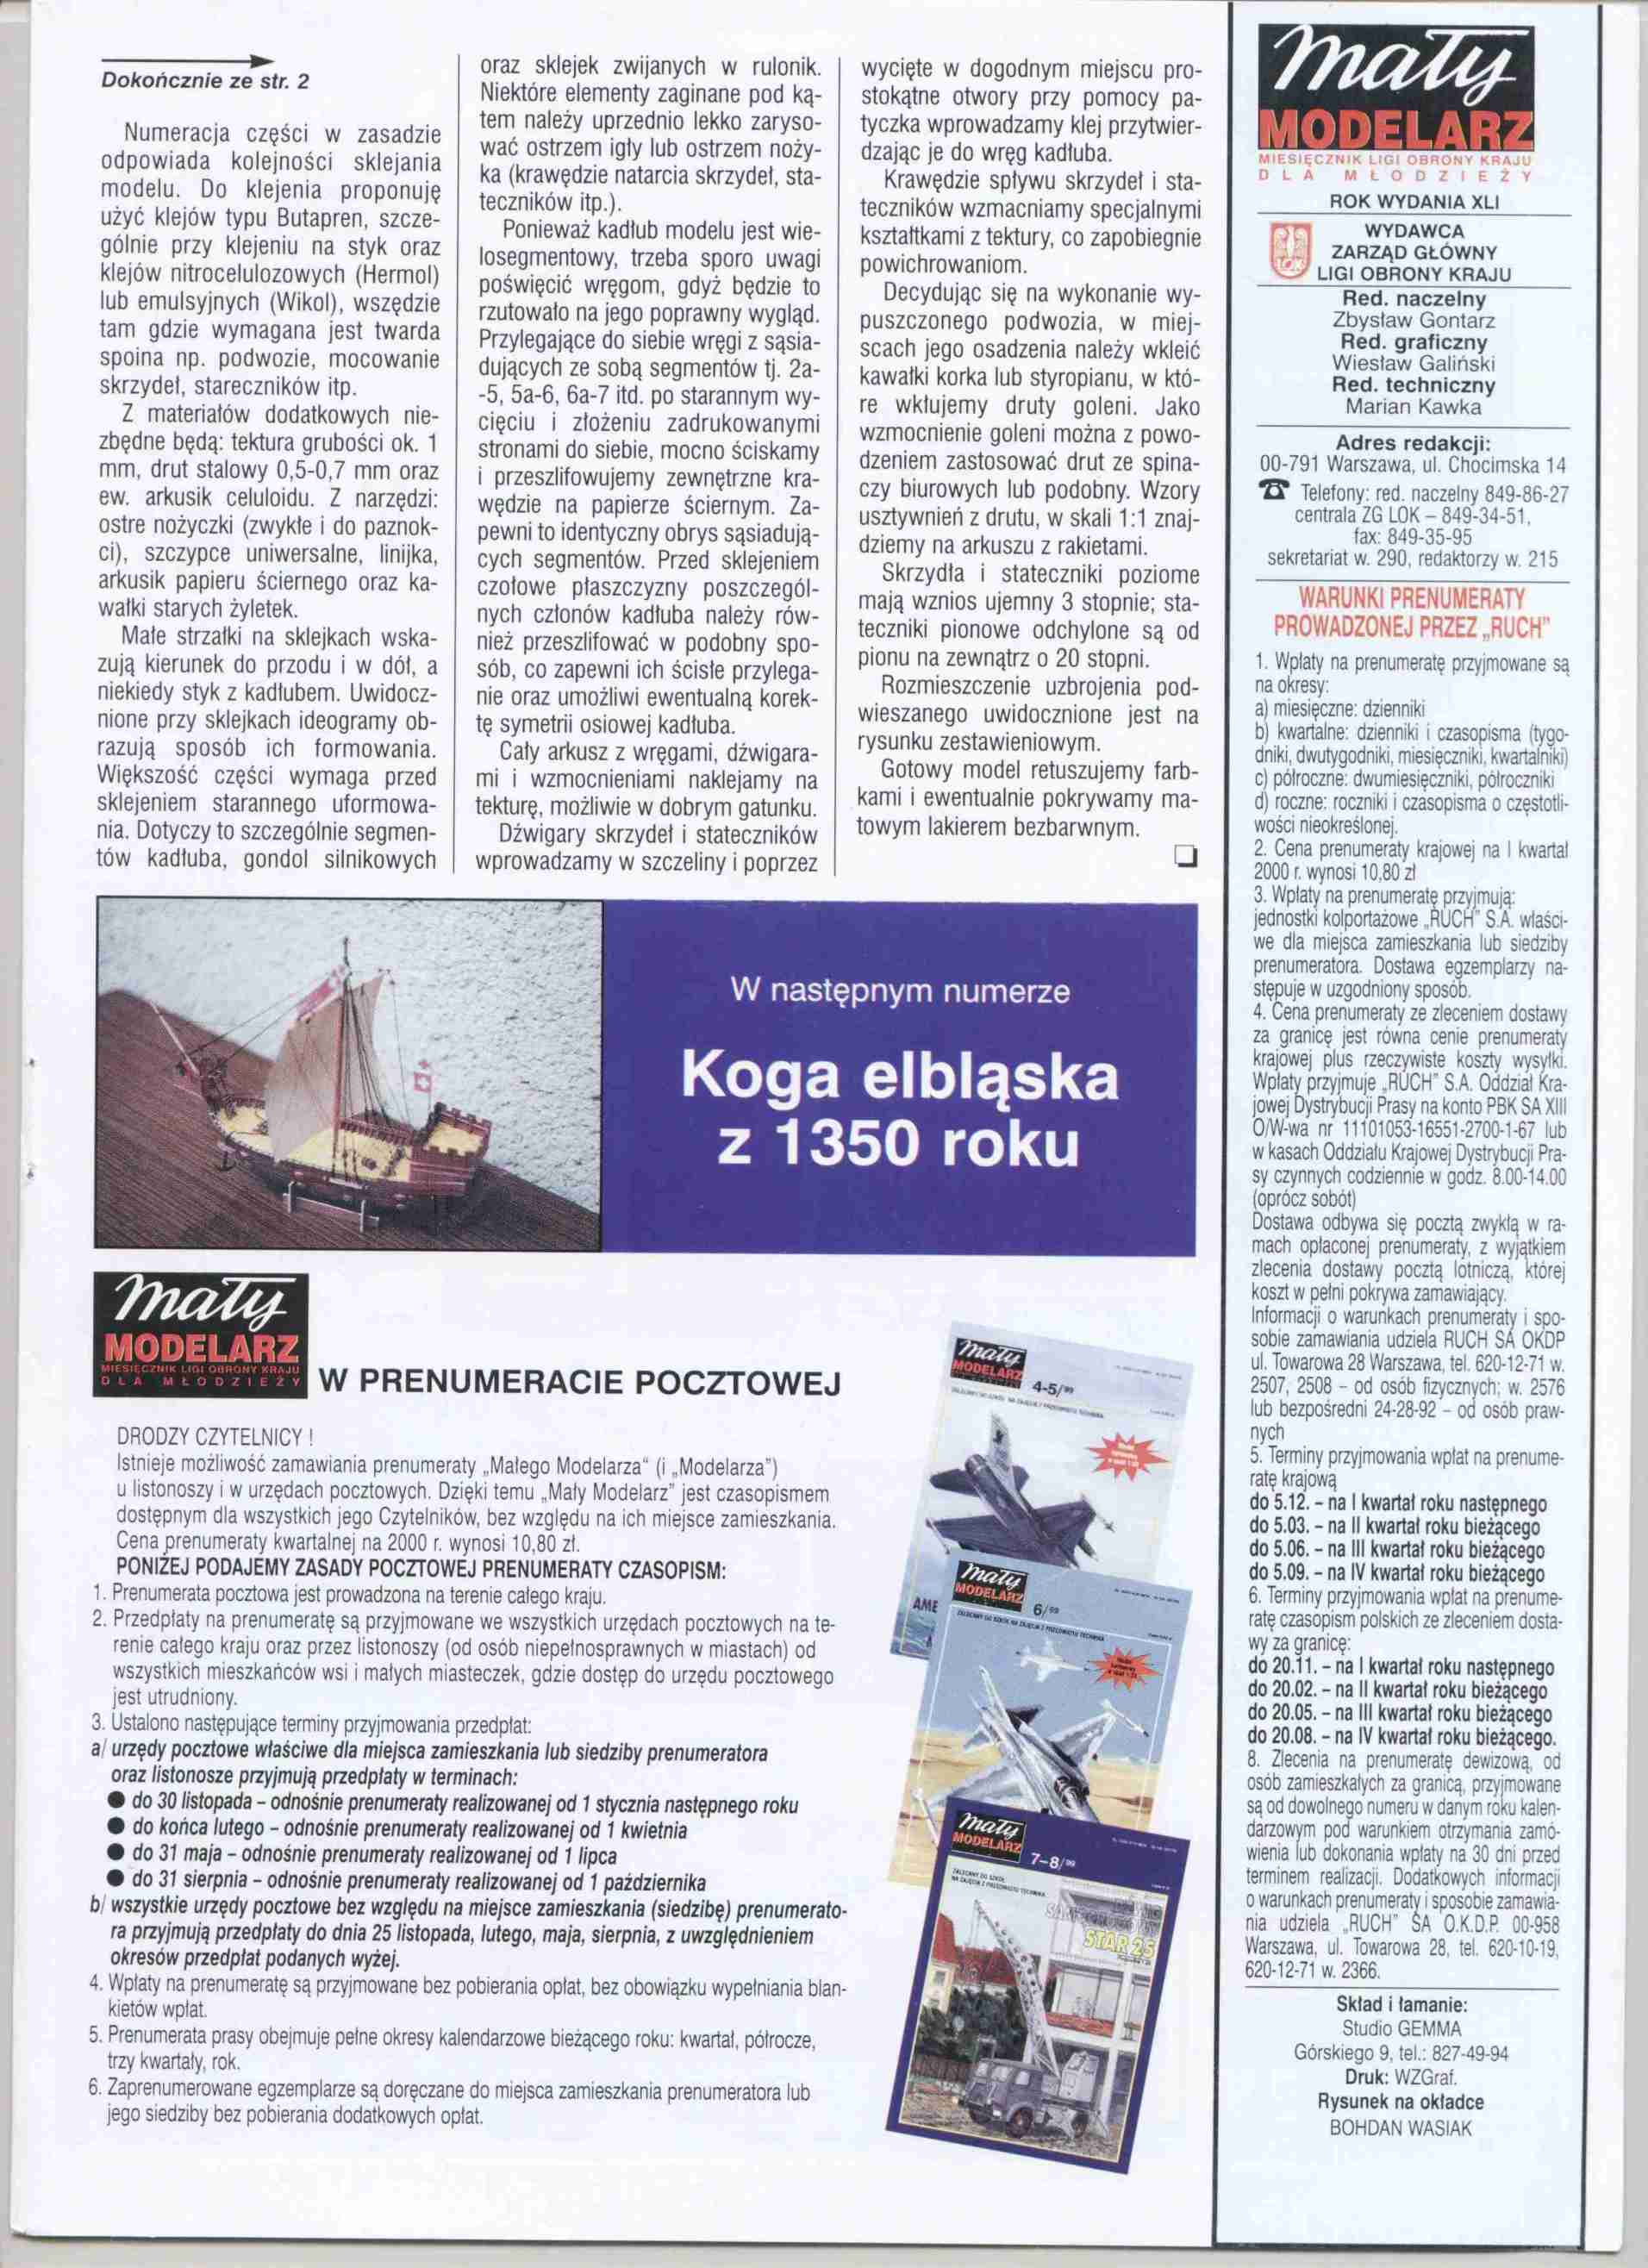 "Maly Modelarz" 10-11, 1999 5 с.